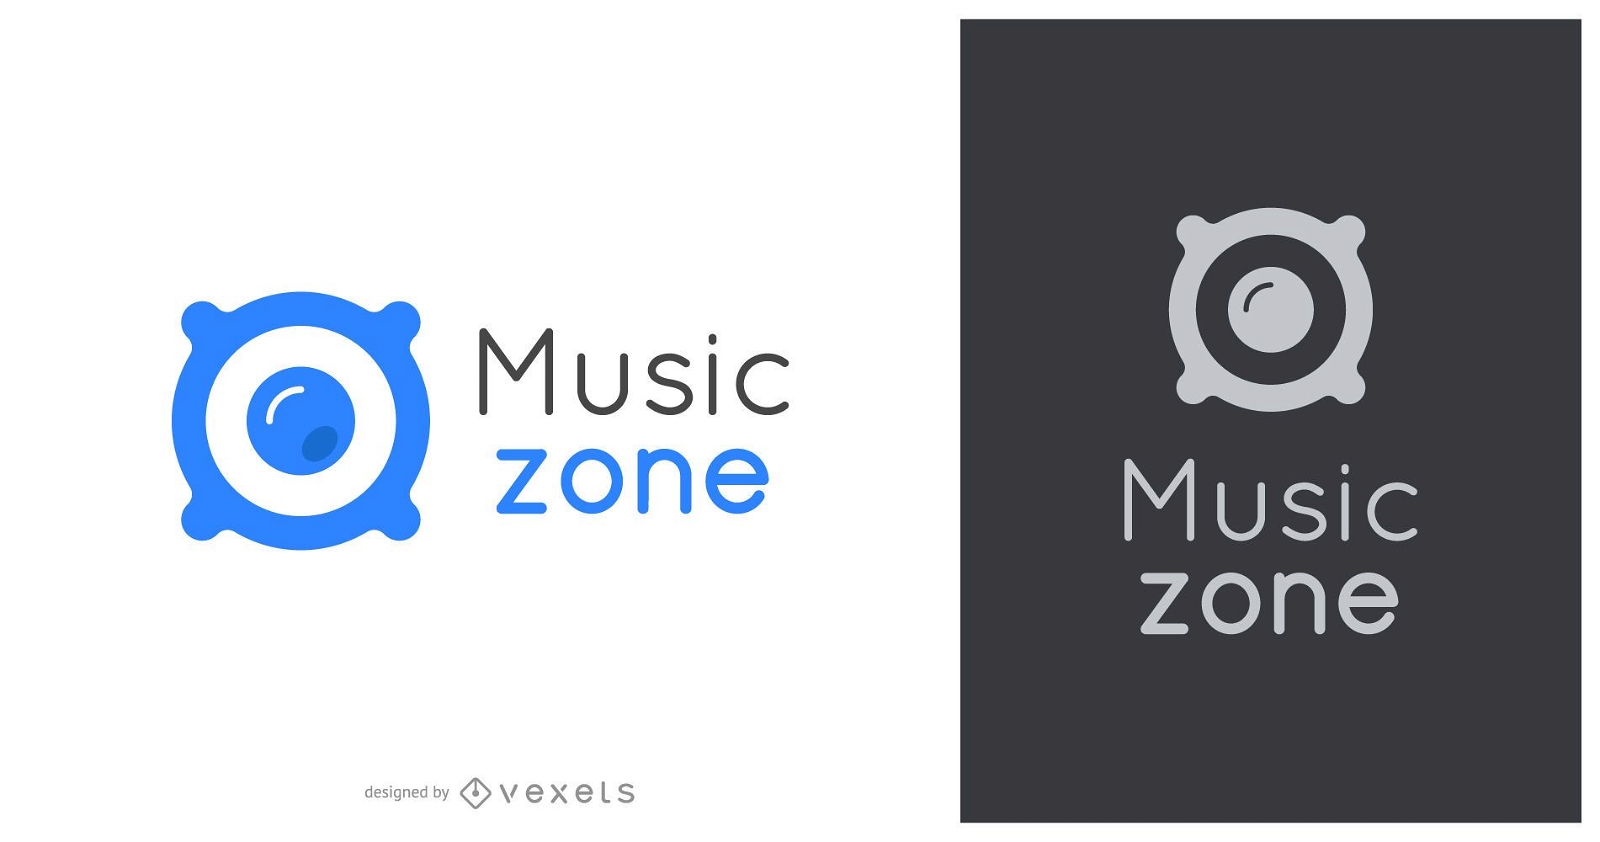 Music zone logo